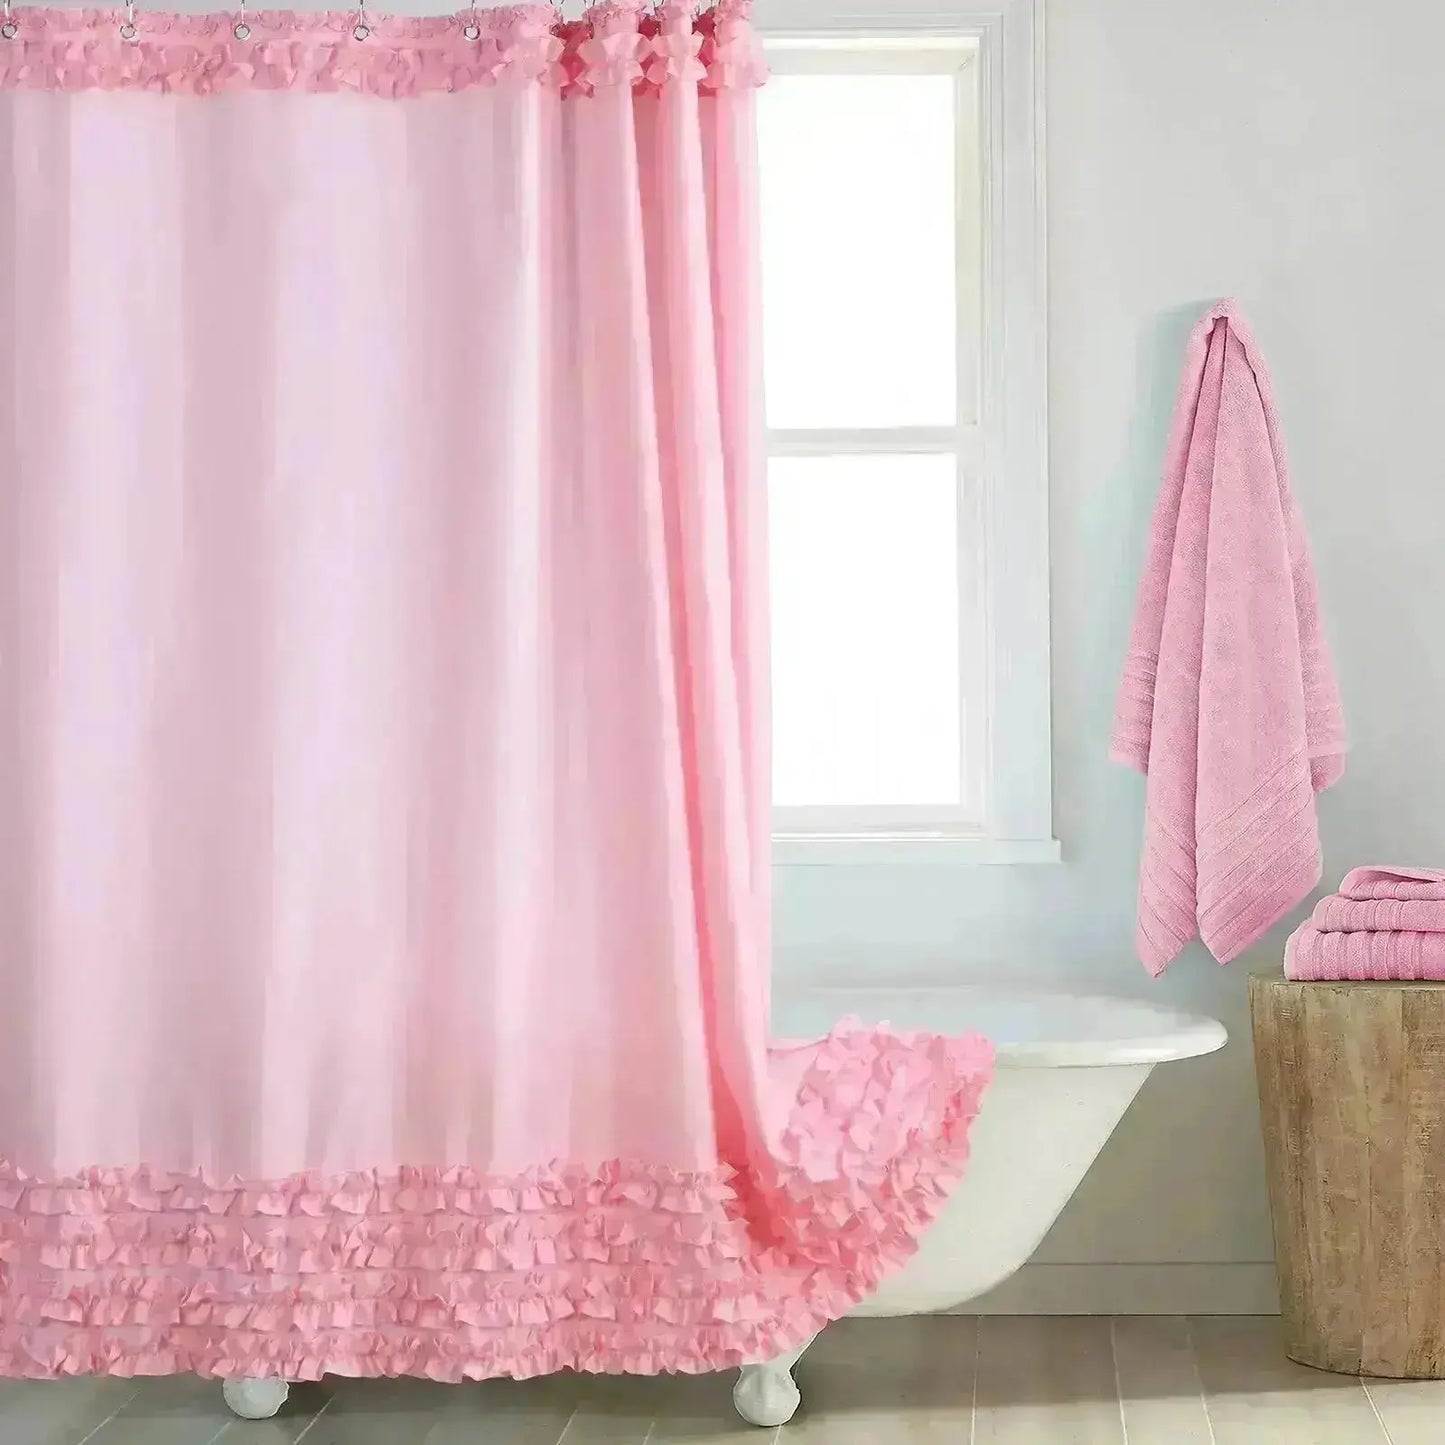 Modern Shower Curtains - HuxoHome